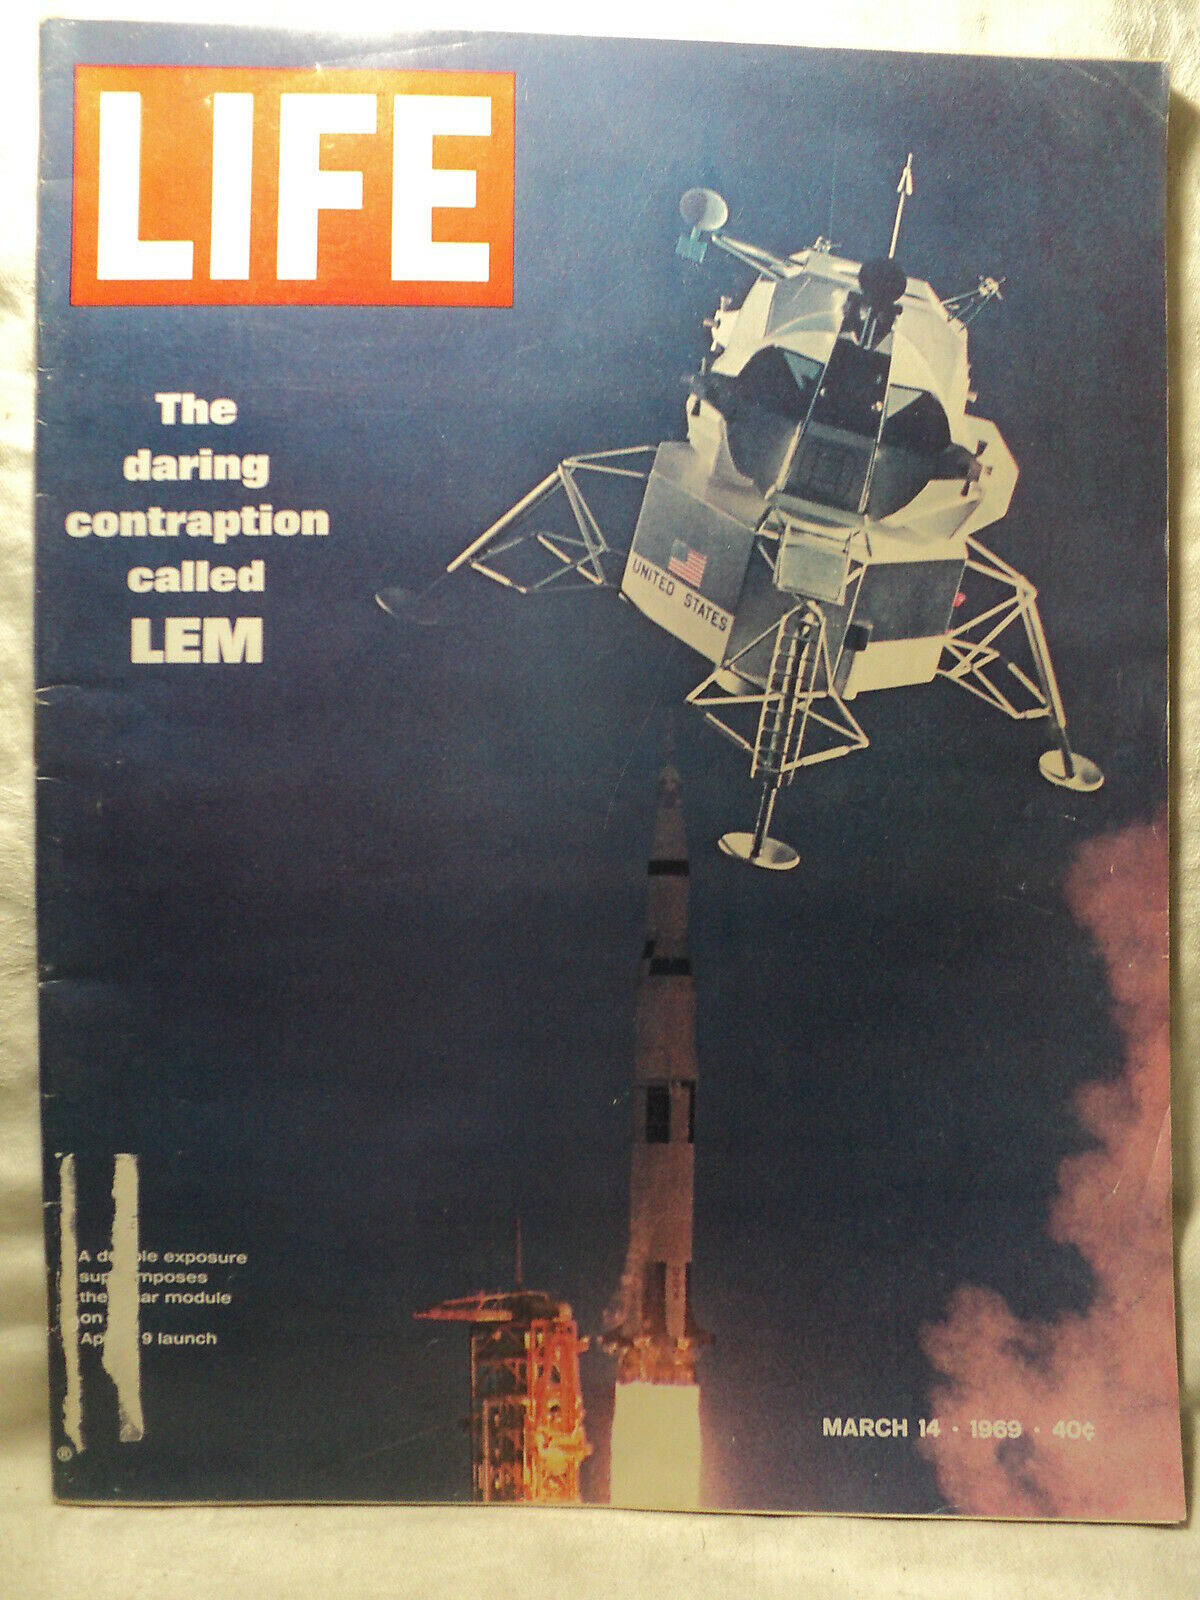 LIFE Magazine - March 14, 1969